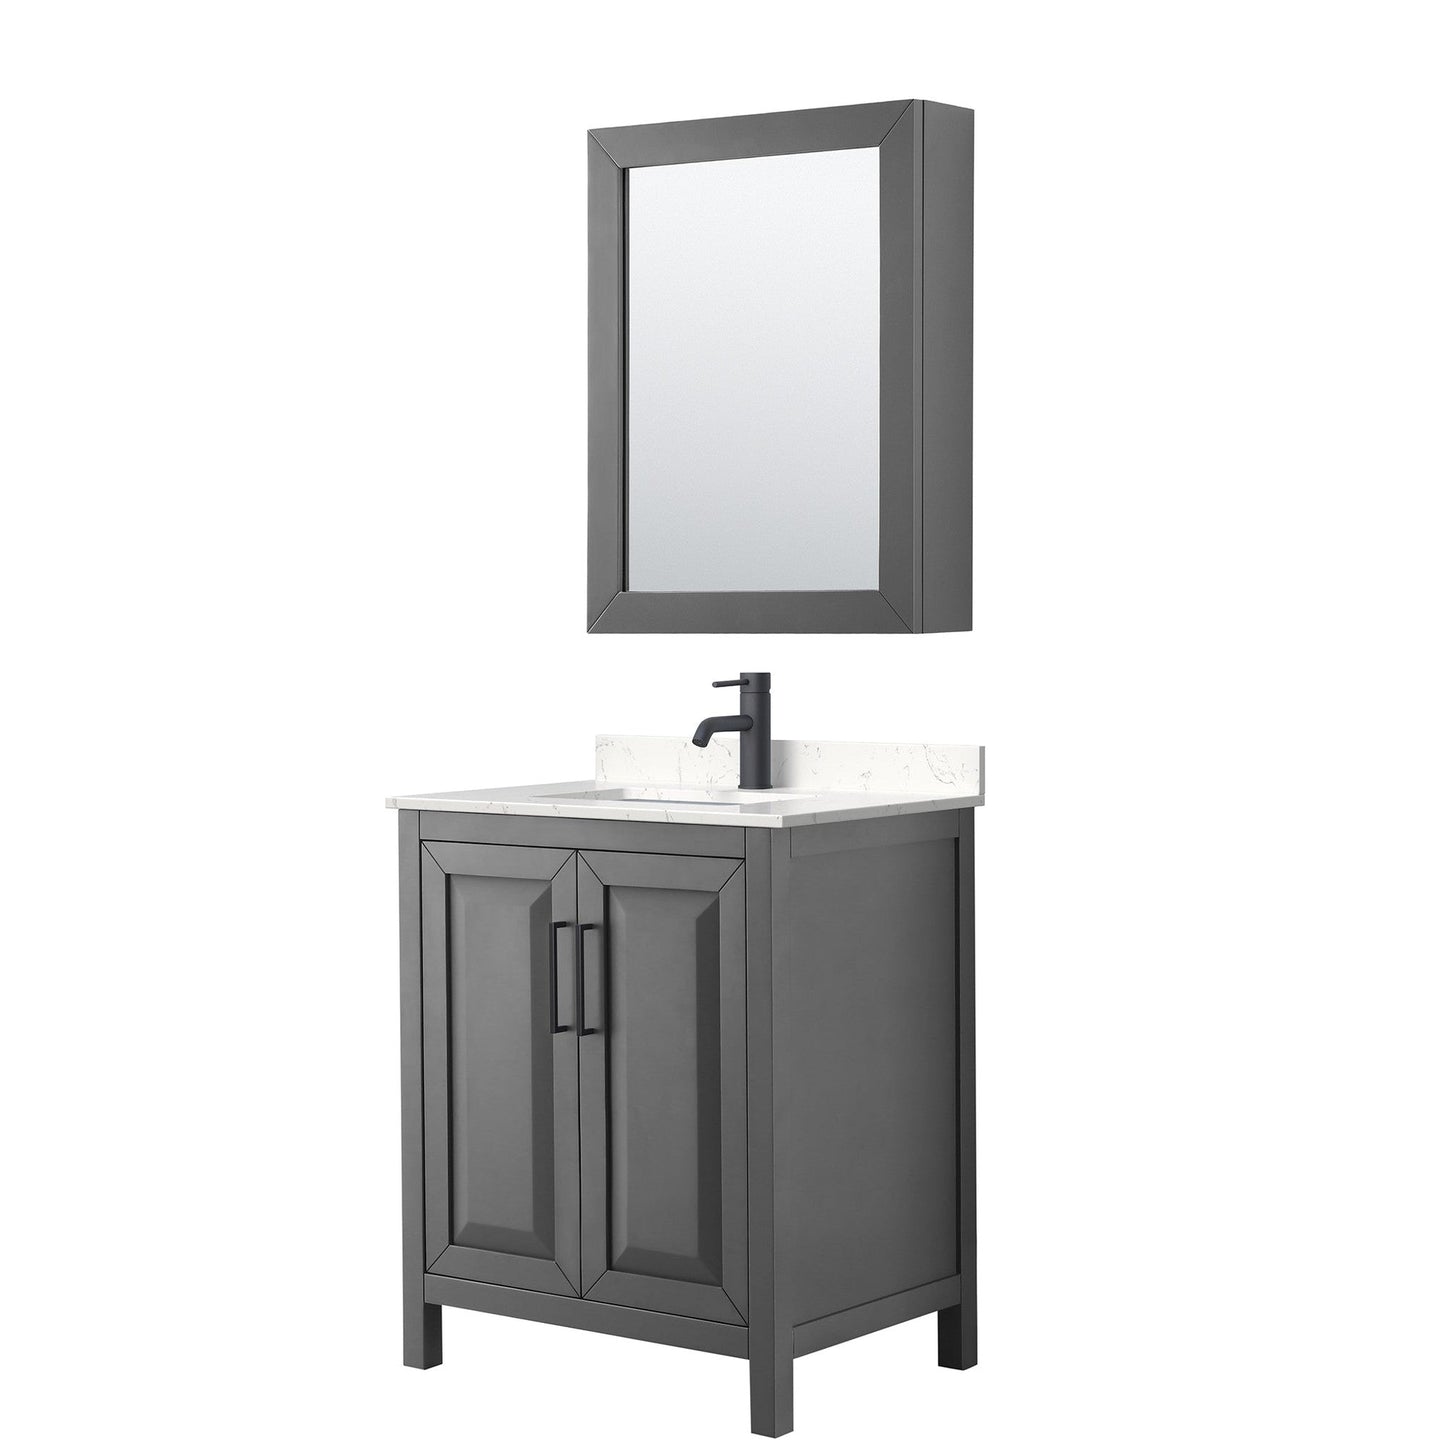 Daria 30" Single Bathroom Vanity in Dark Gray, Carrara Cultured Marble Countertop, Undermount Square Sink, Matte Black Trim, Medicine Cabinet